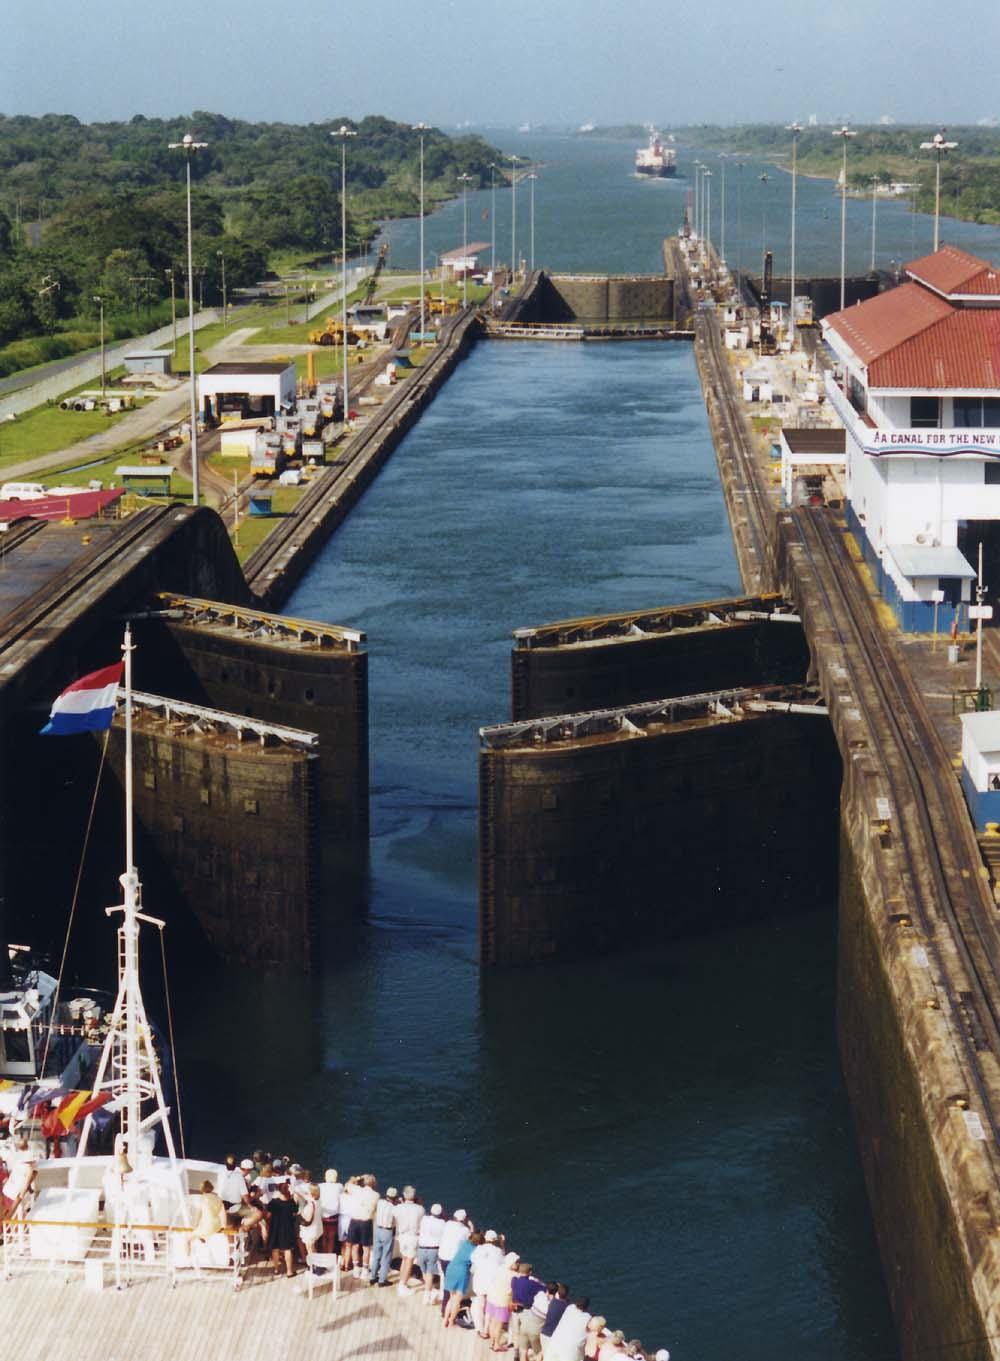 Panama canal gatun locks opening [Photograph]. (n.d.). Retrieved from http://upload.wikimedia.org/wikipedia/commons/7/71/ Panama_Canal_Gatun_Locks_opening.